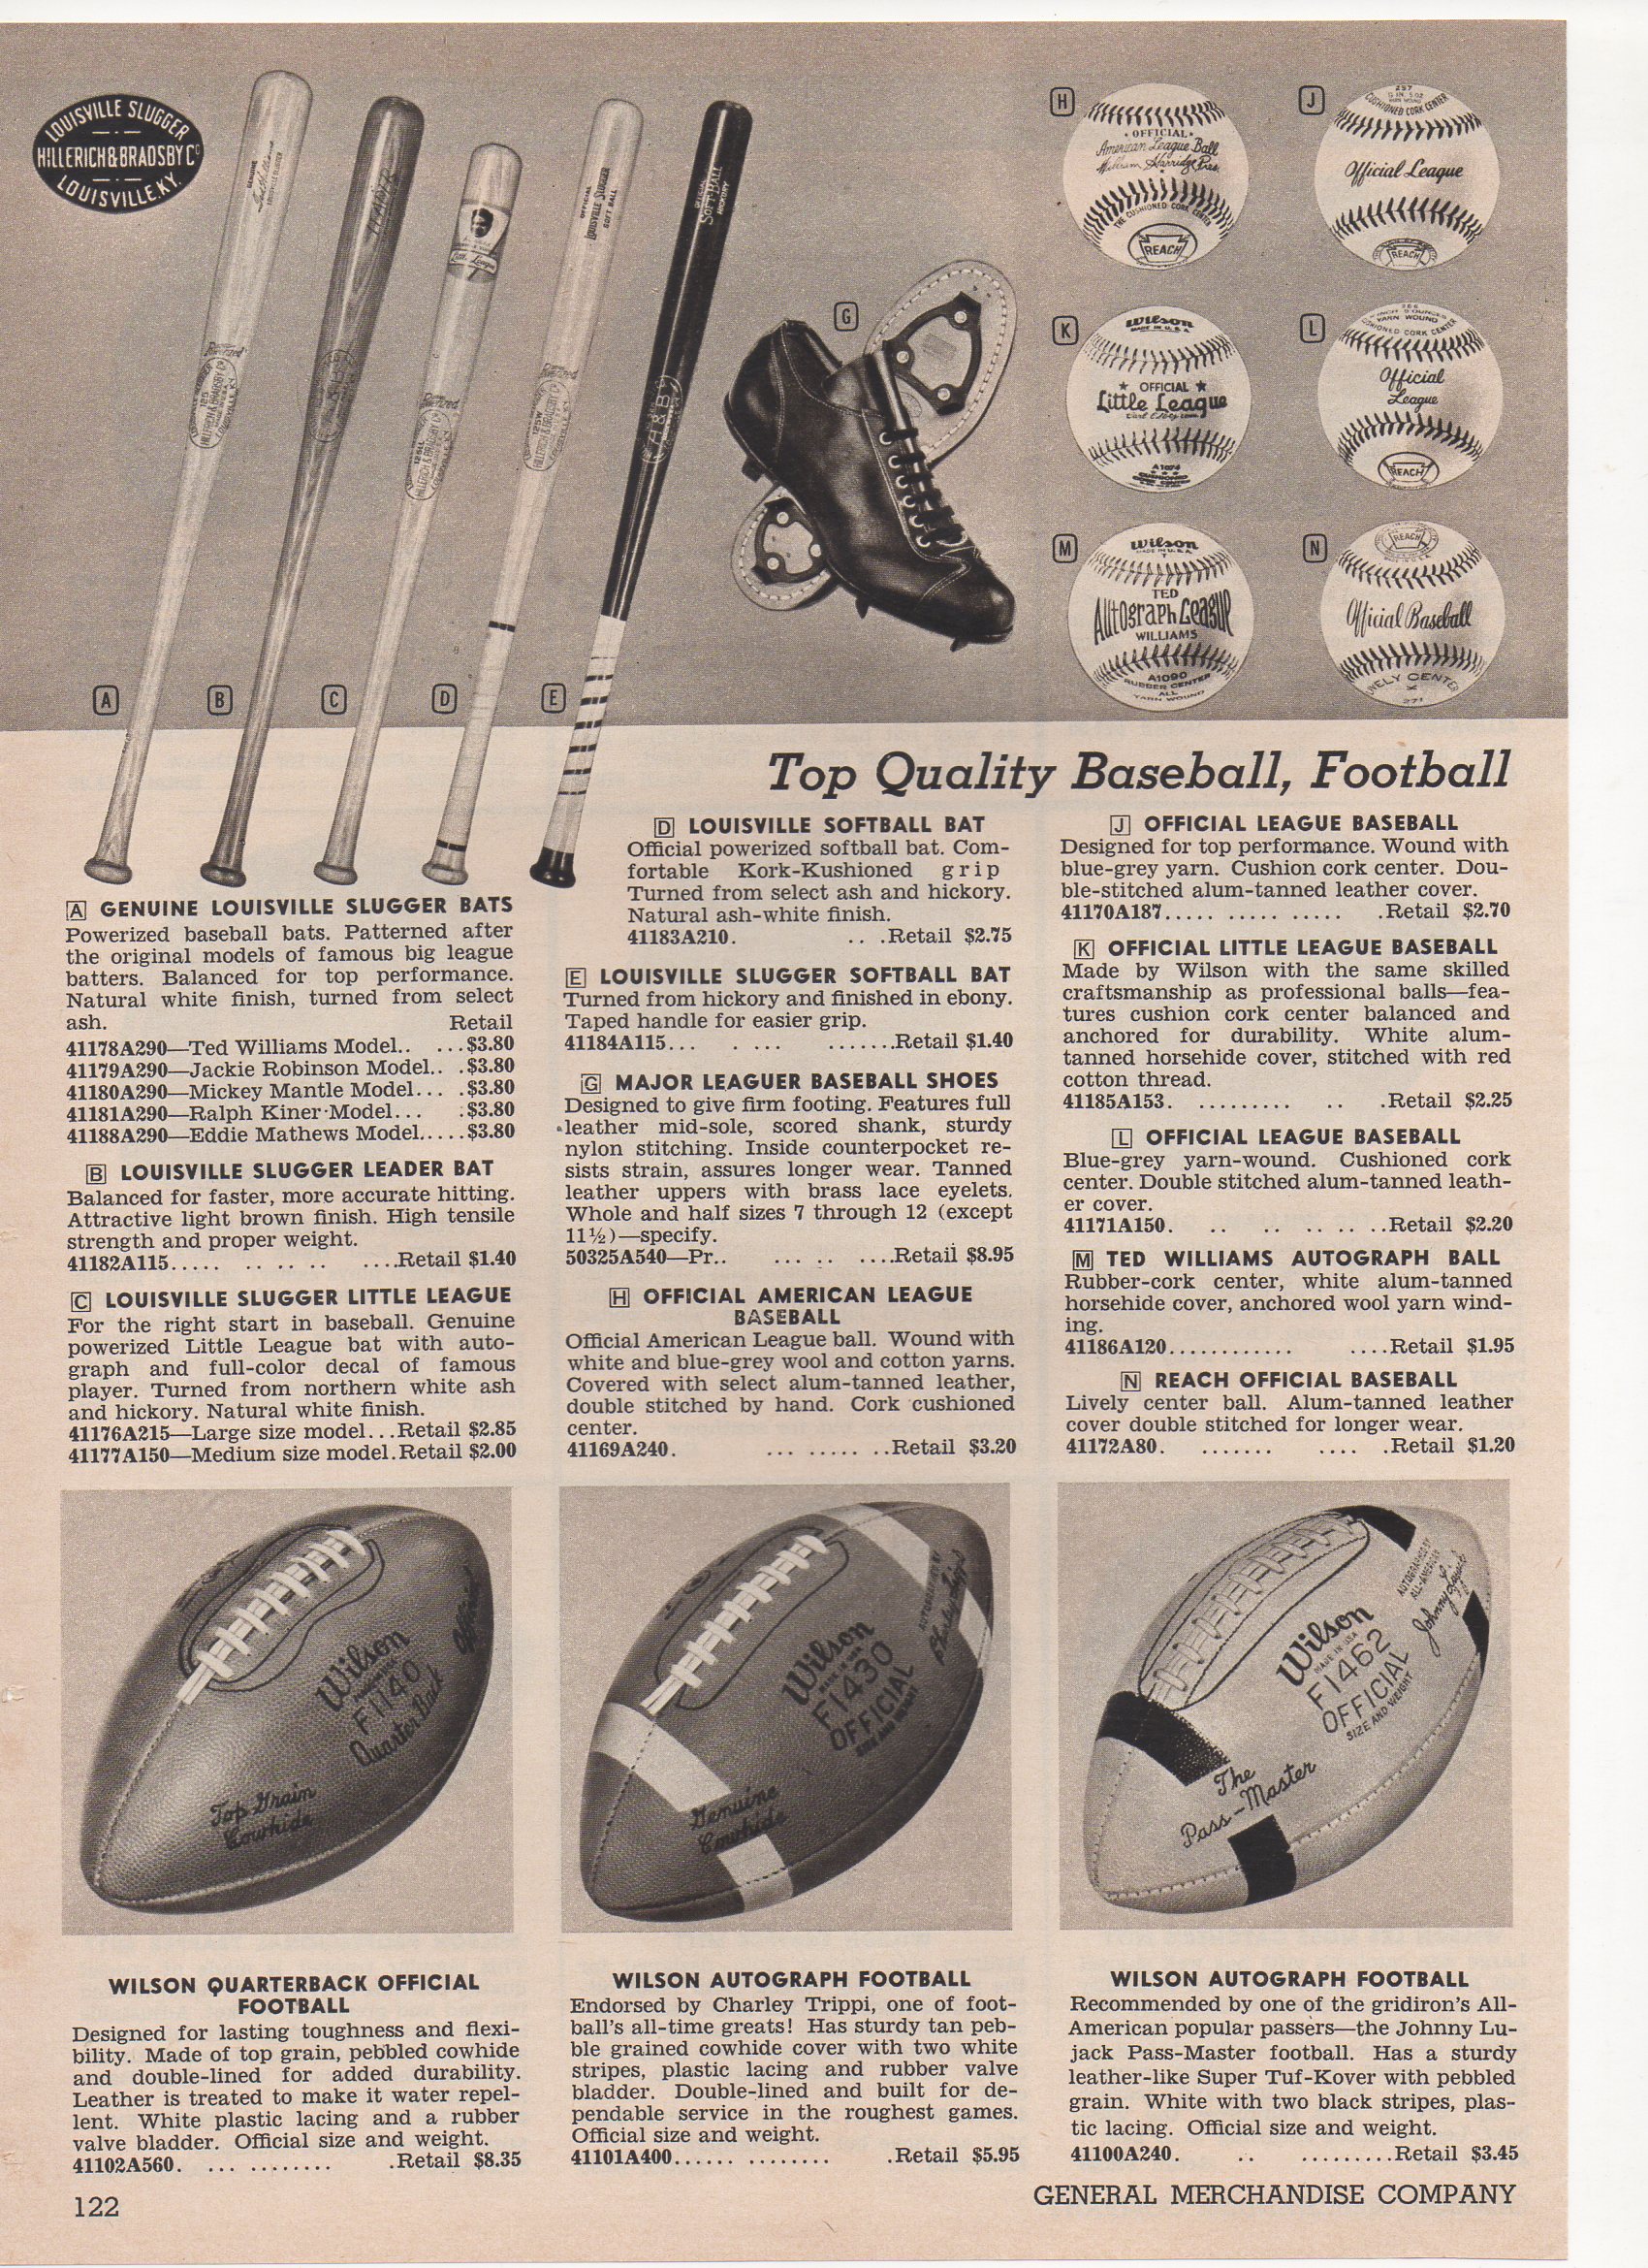 1954 general merchandise company